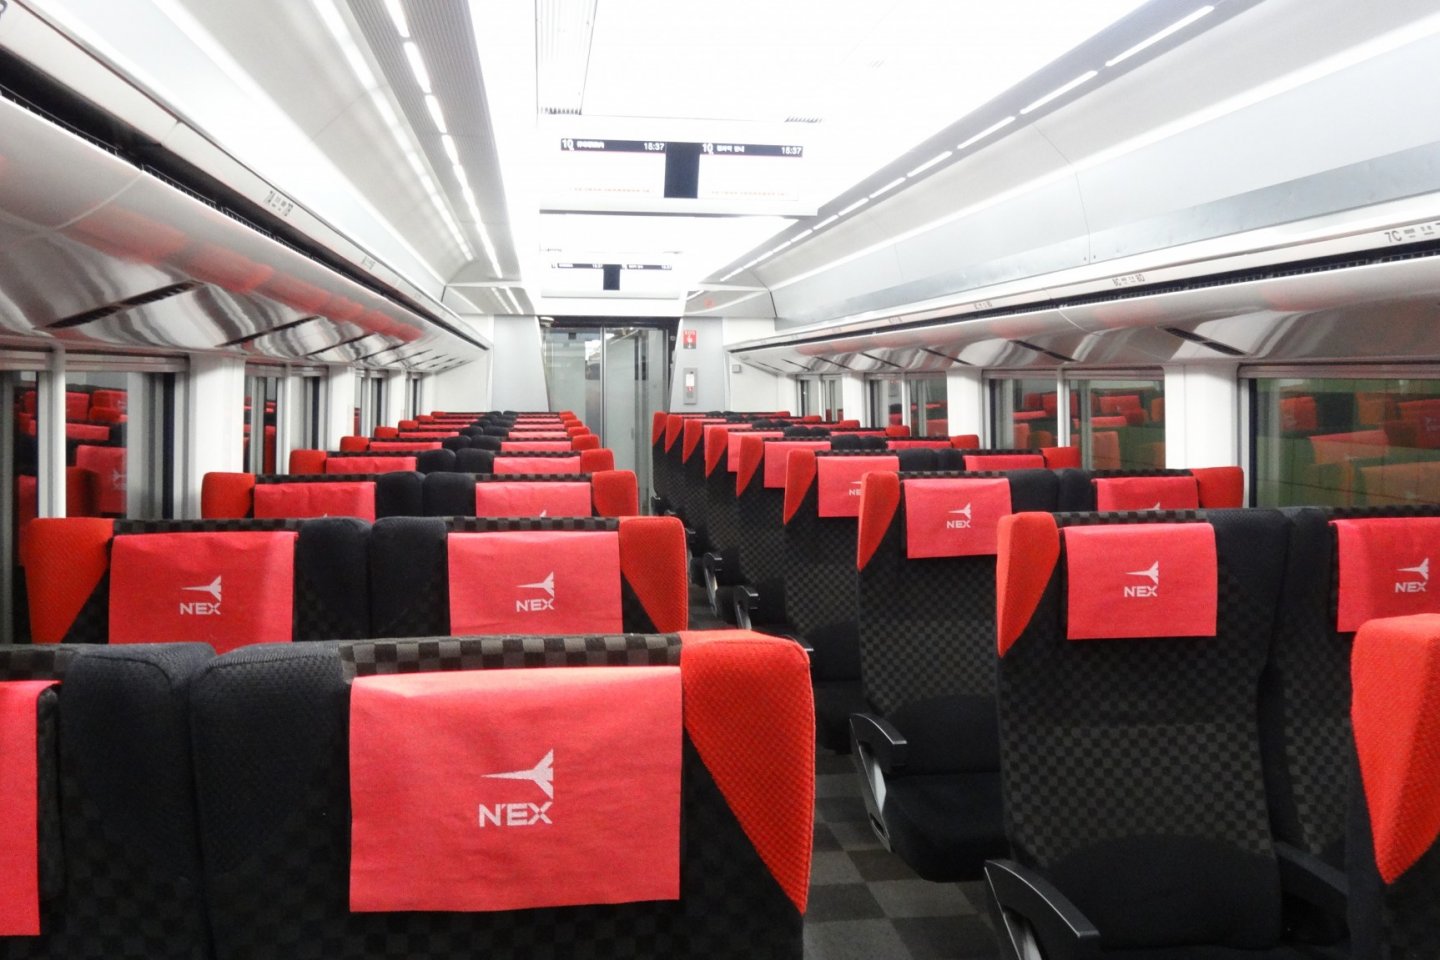 Inside the N'EX train